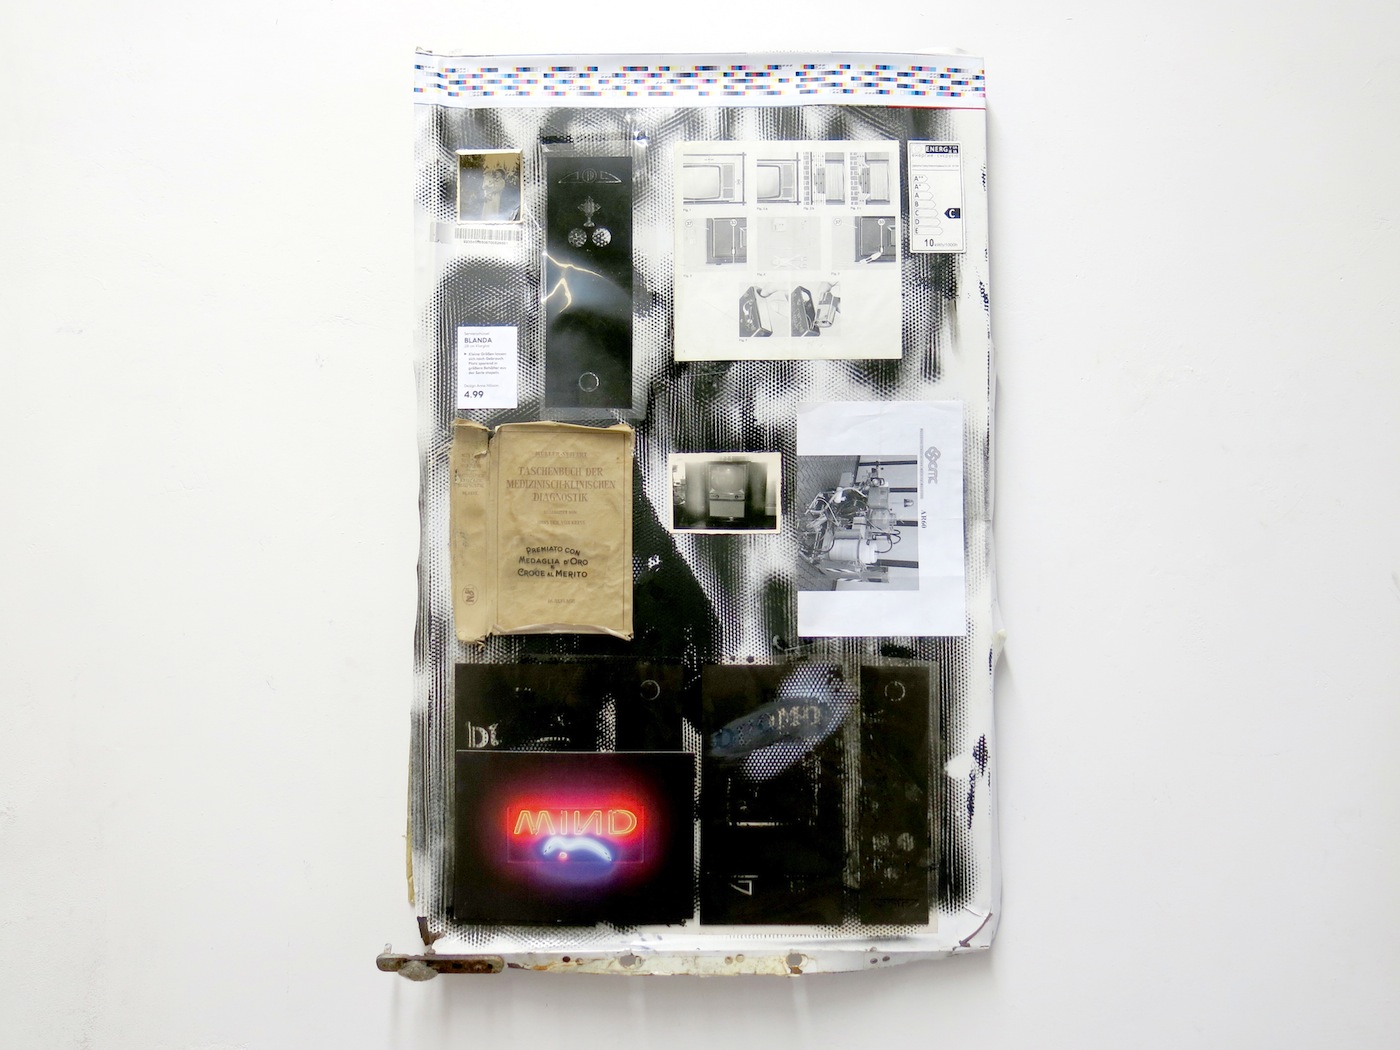 Lapo Simeoni, Blanda Mind and Diagnostik theorie, 2016, mix media su pannello frigorifero dell'artista, 80x56x8 cm